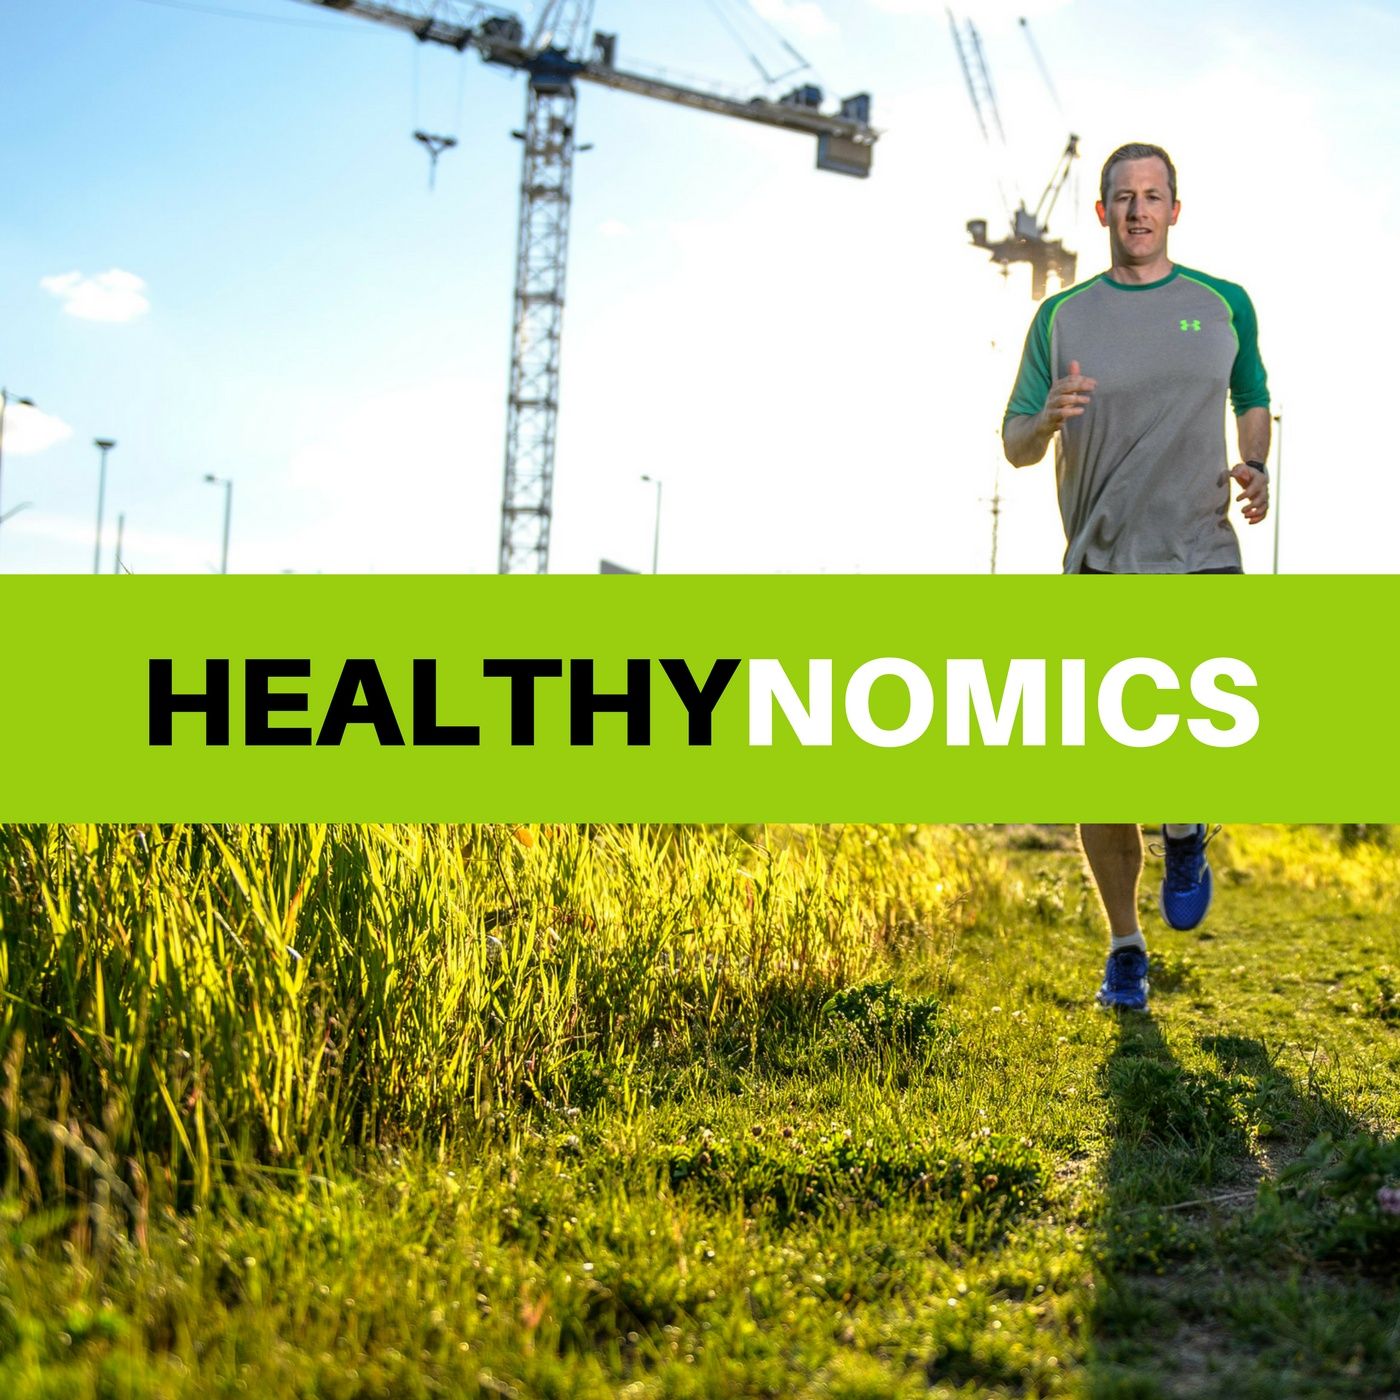 The Healthynomics Podcast